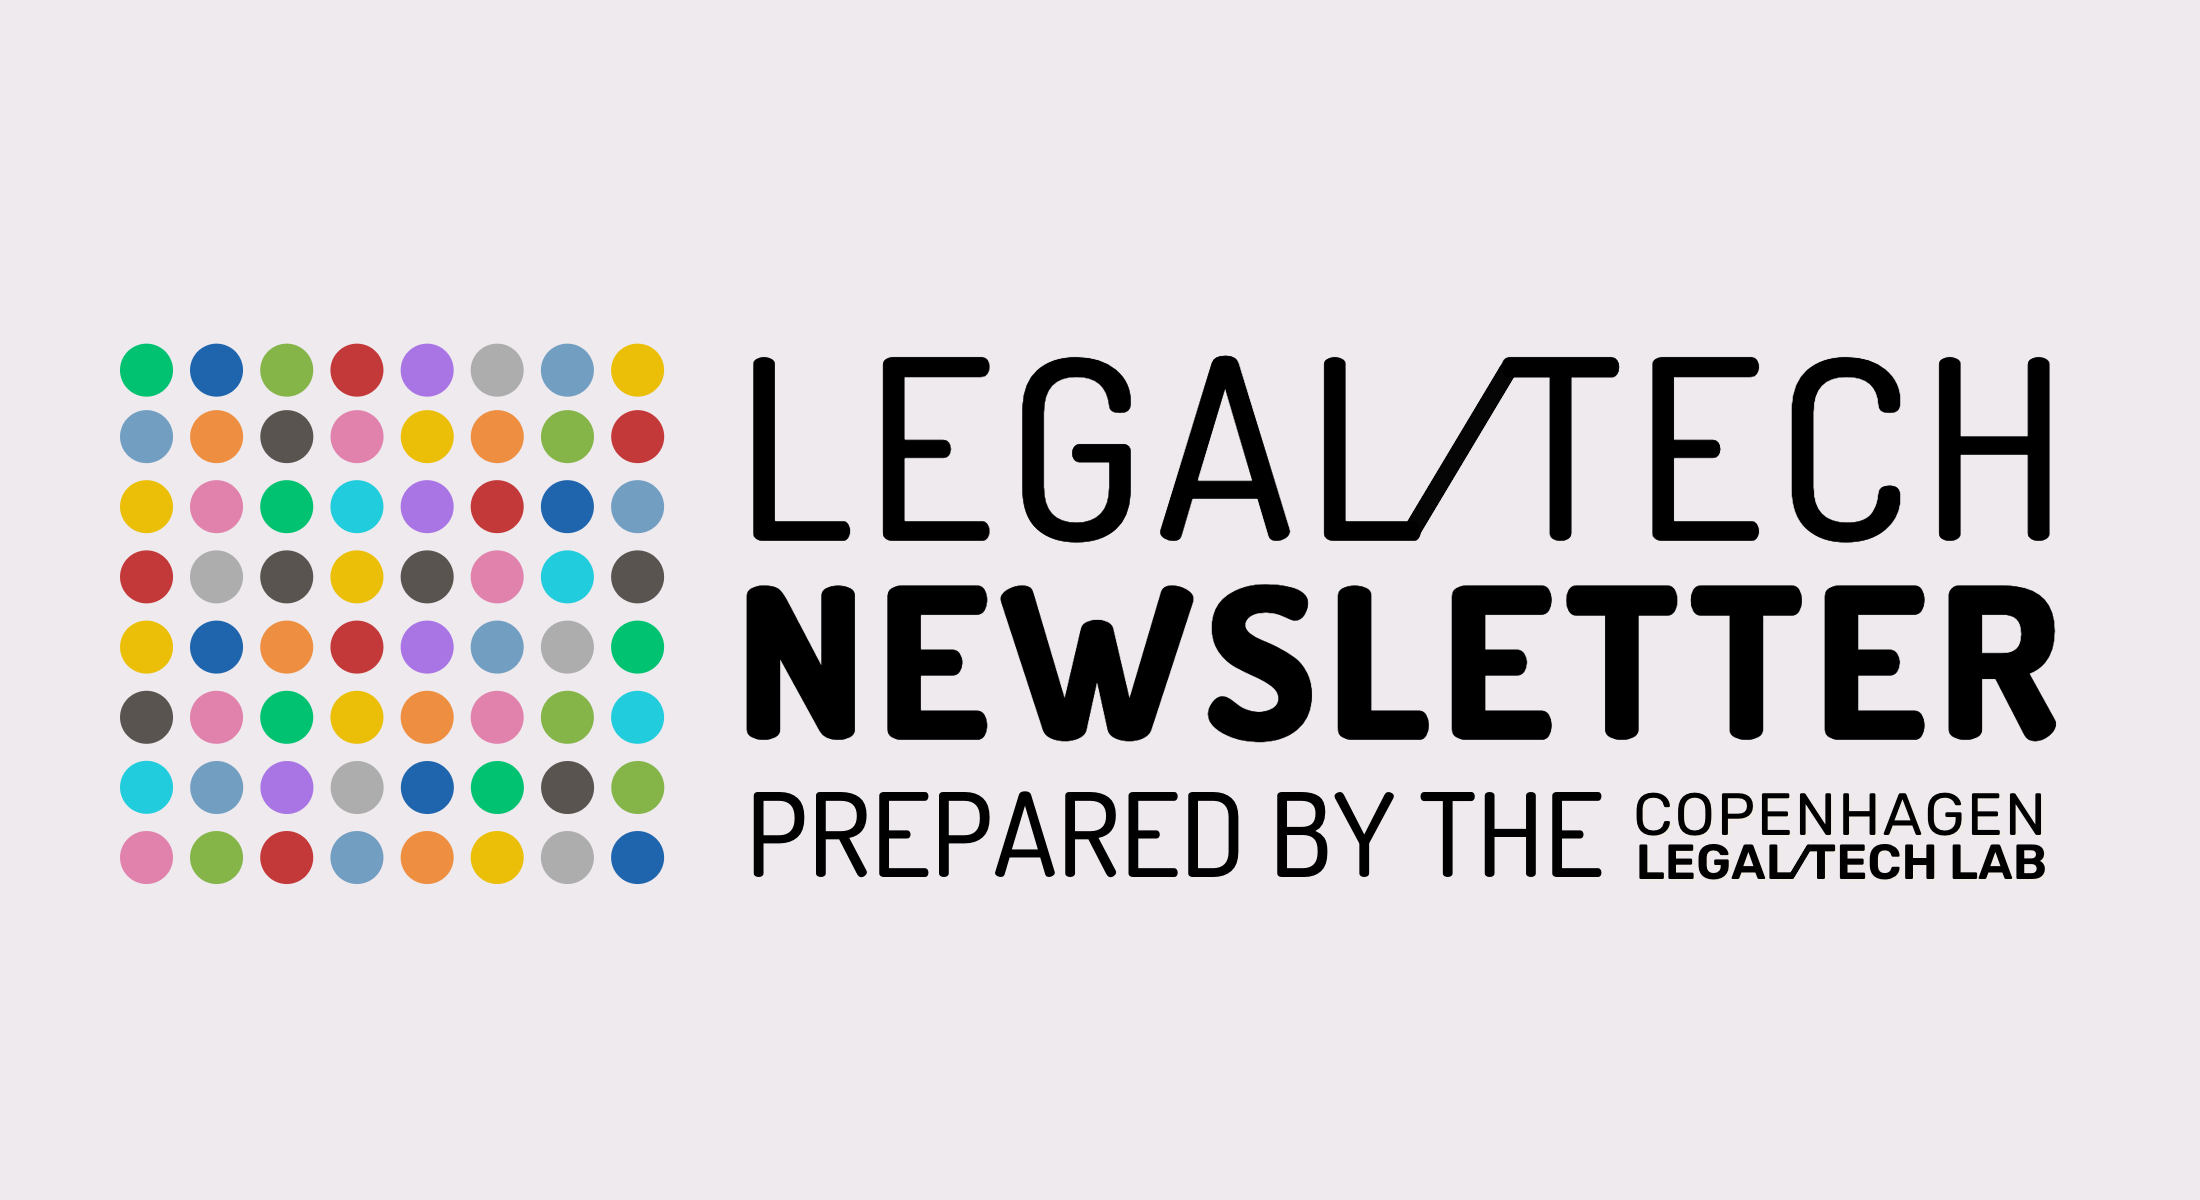 Legal Tech Newsletter, prepared by the Copenhagen Legal Tech Lab